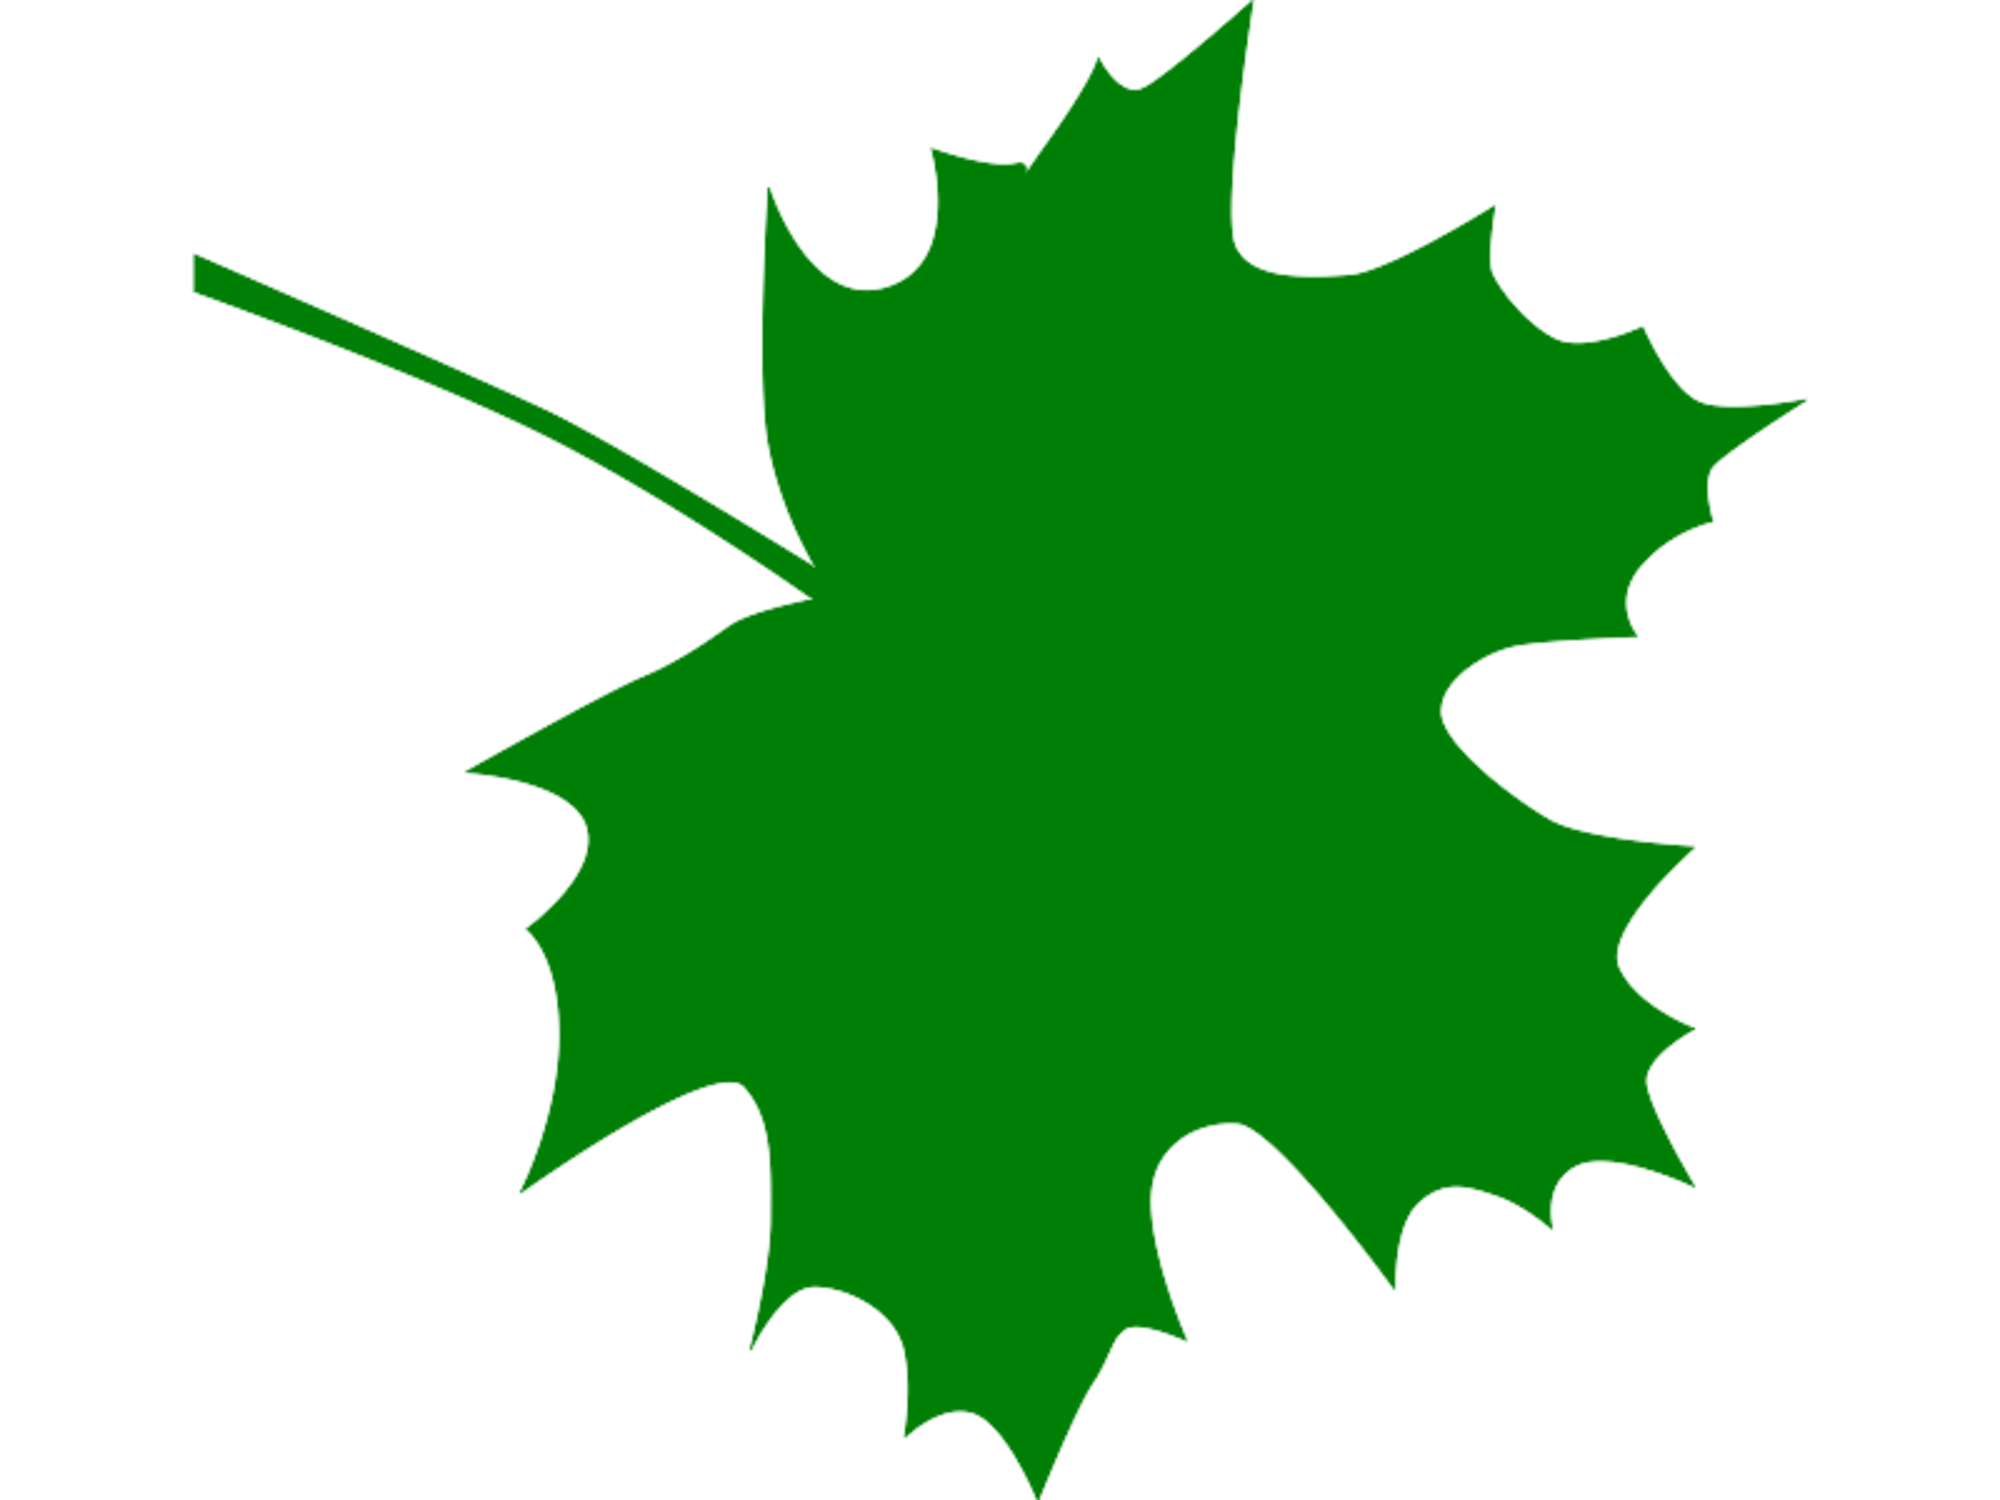 Maple leaf images clip art